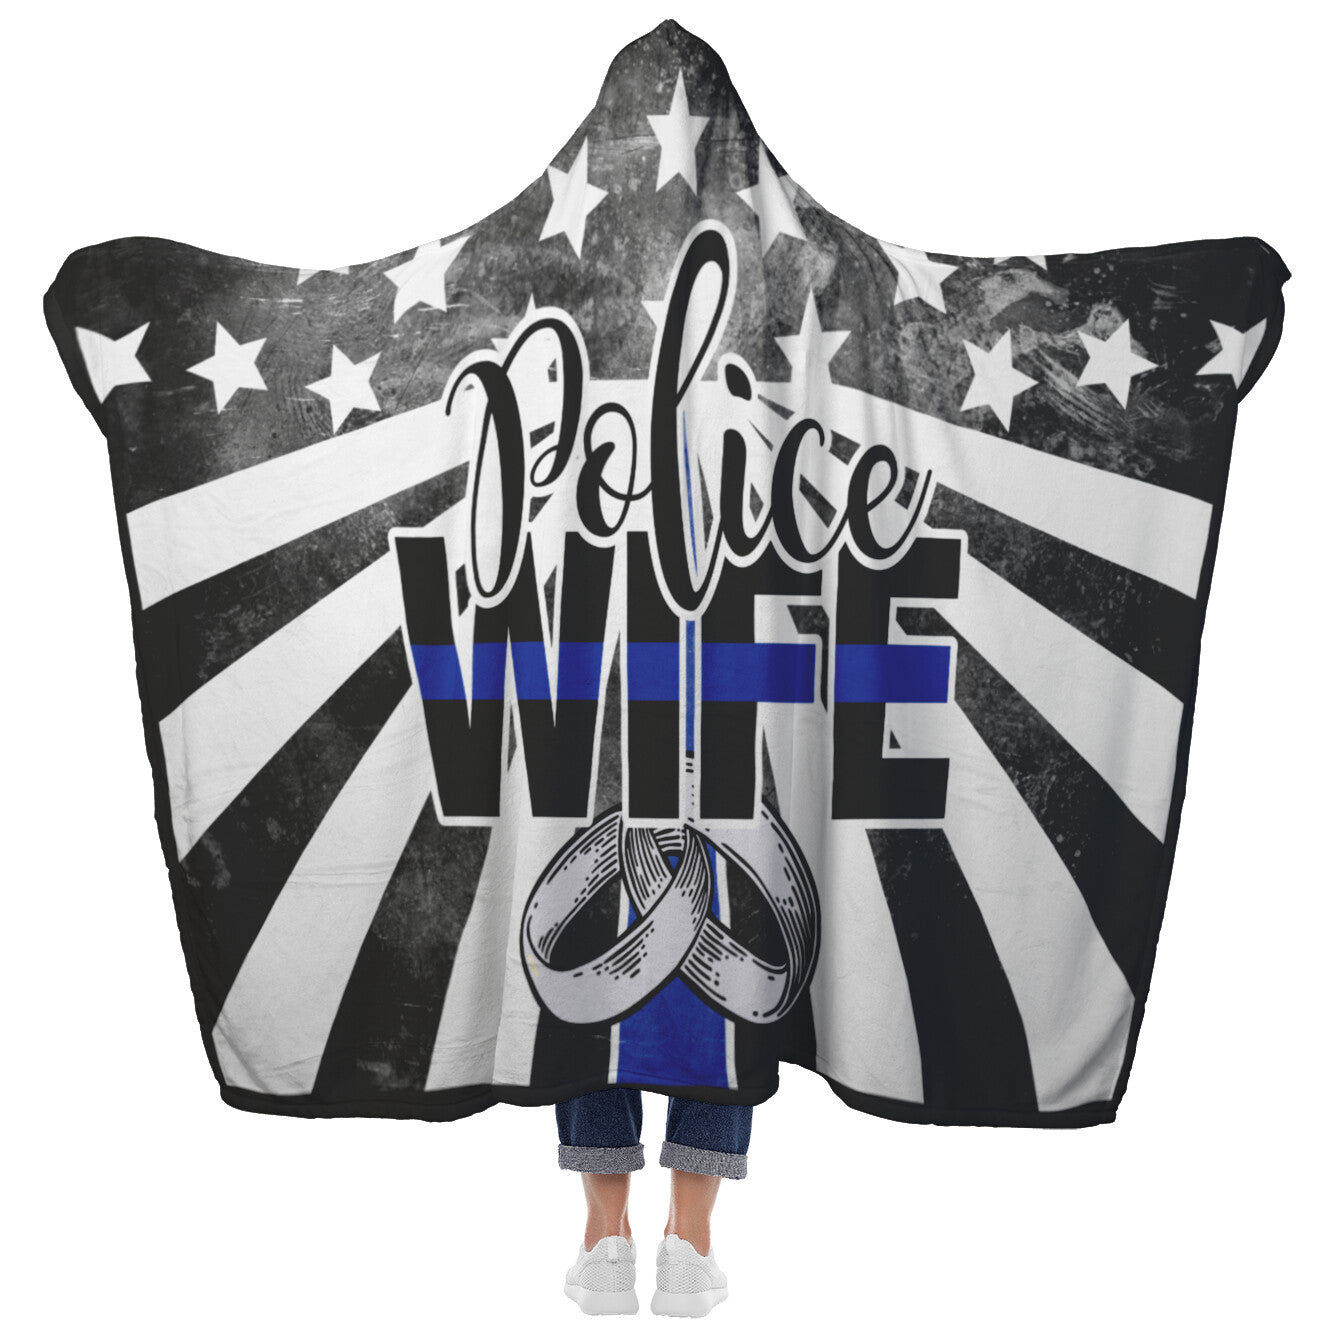 Police Wife Hooded Blanket